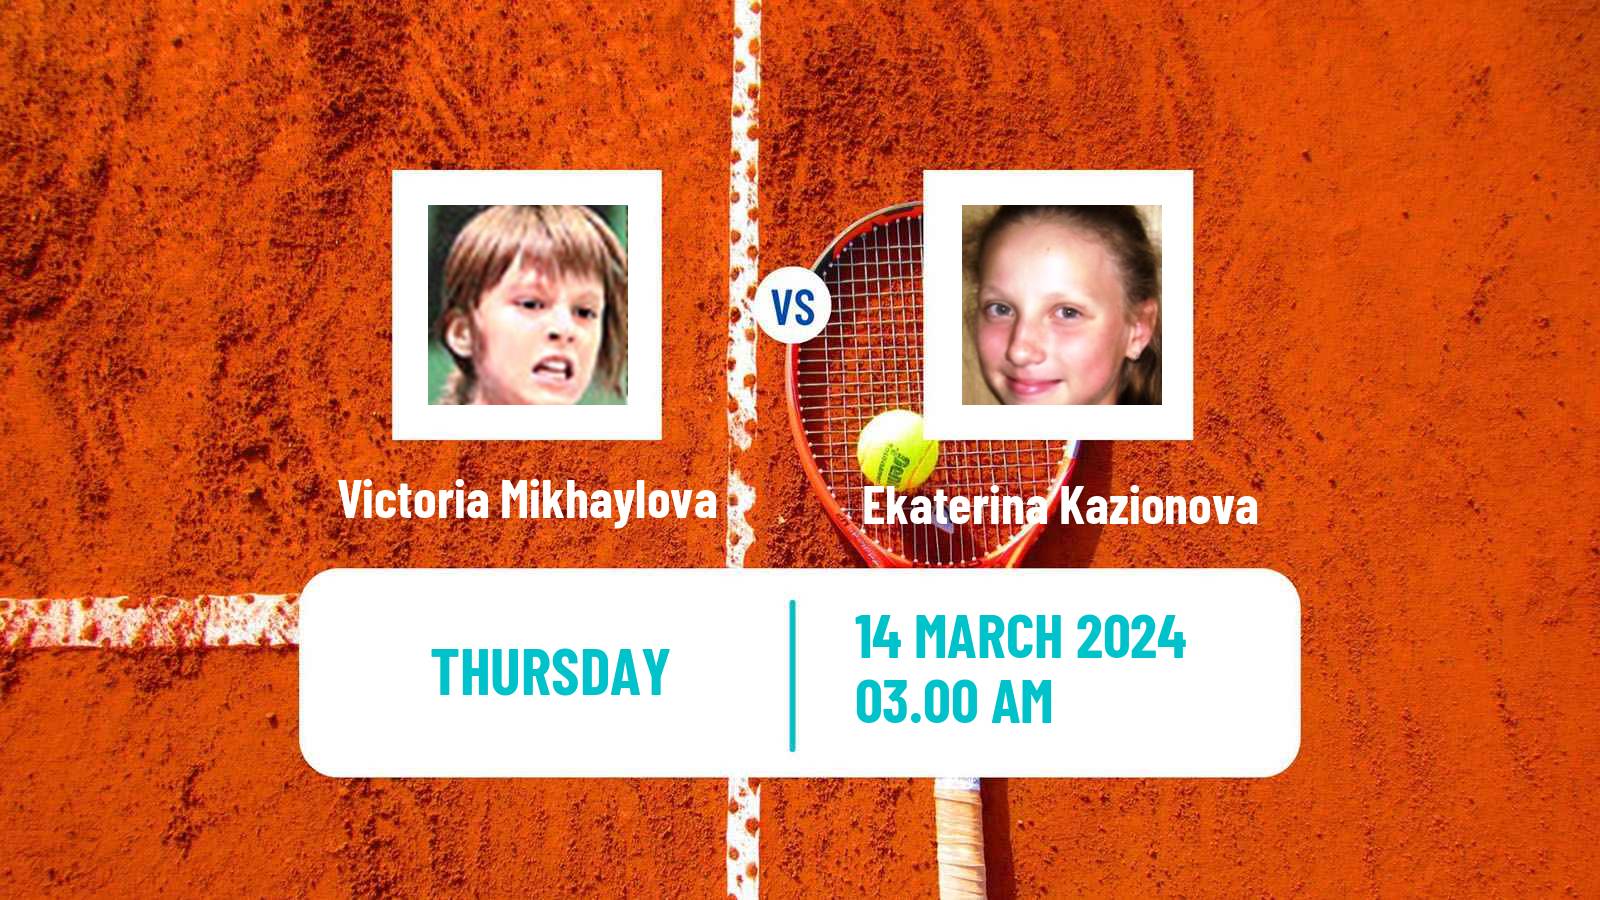 Tennis ITF W15 Karaganda 2 Women Victoria Mikhaylova - Ekaterina Kazionova